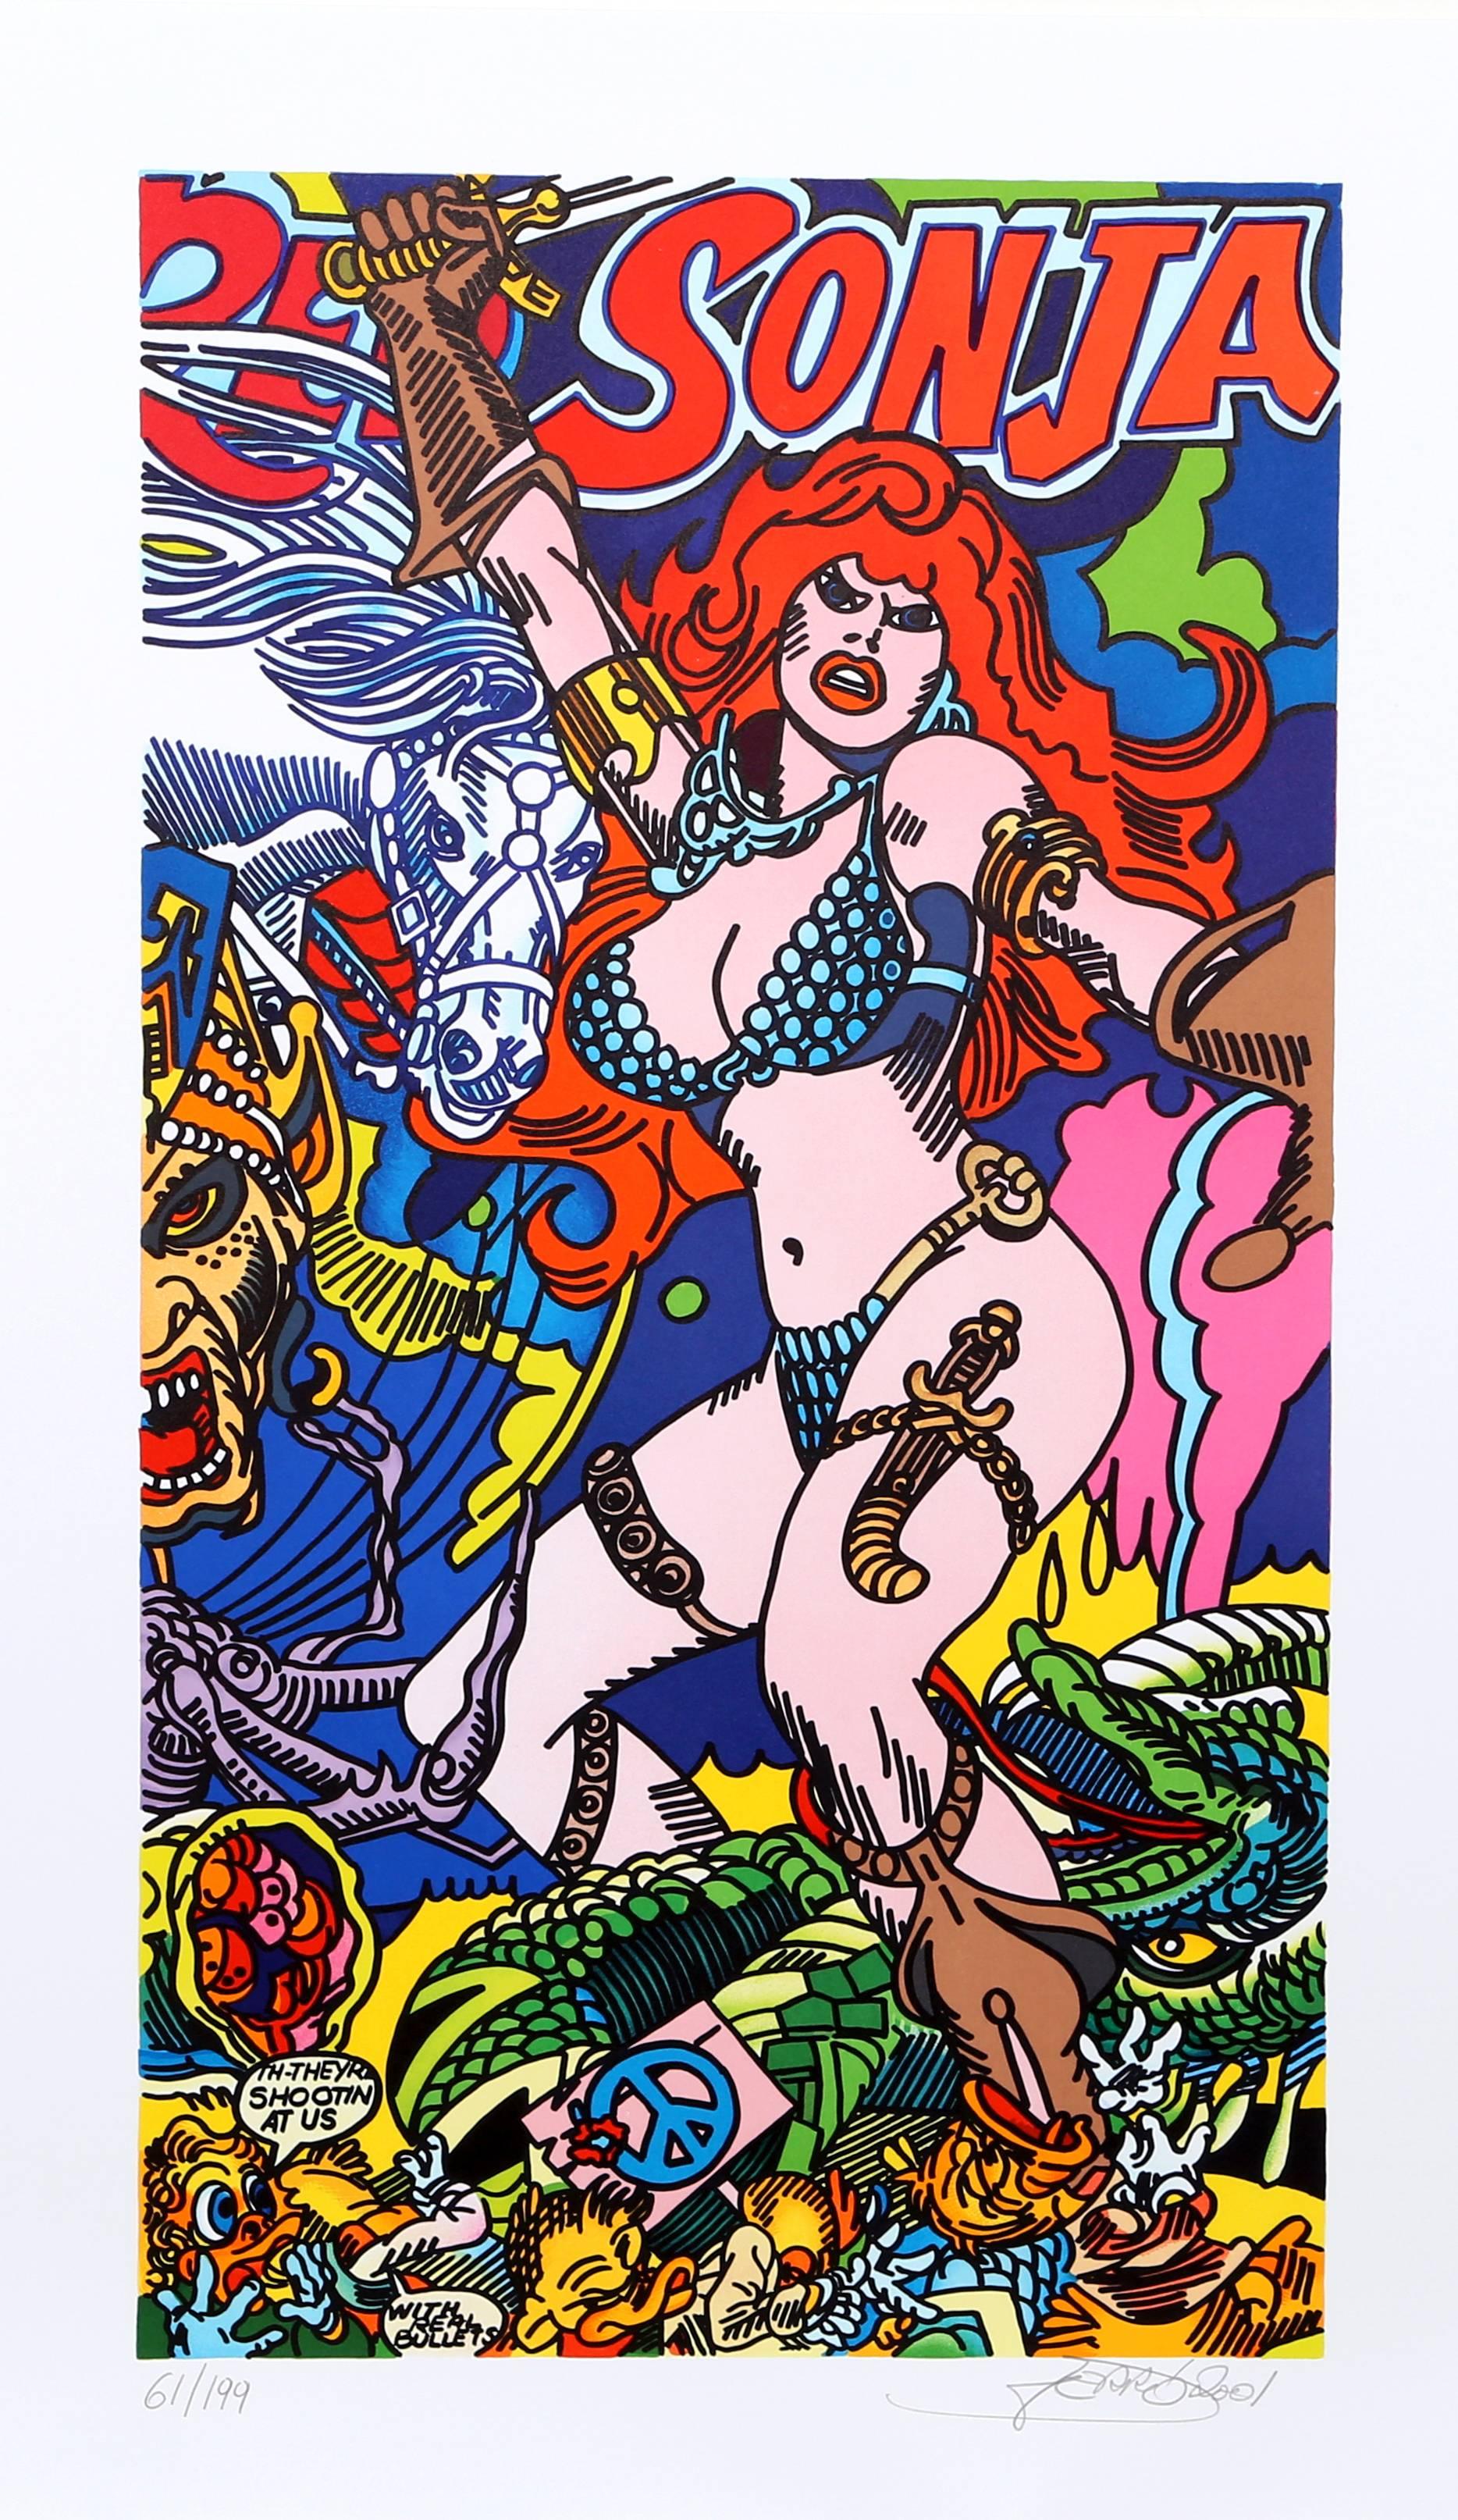 "Red Sonja", Pop Art Print by Erró